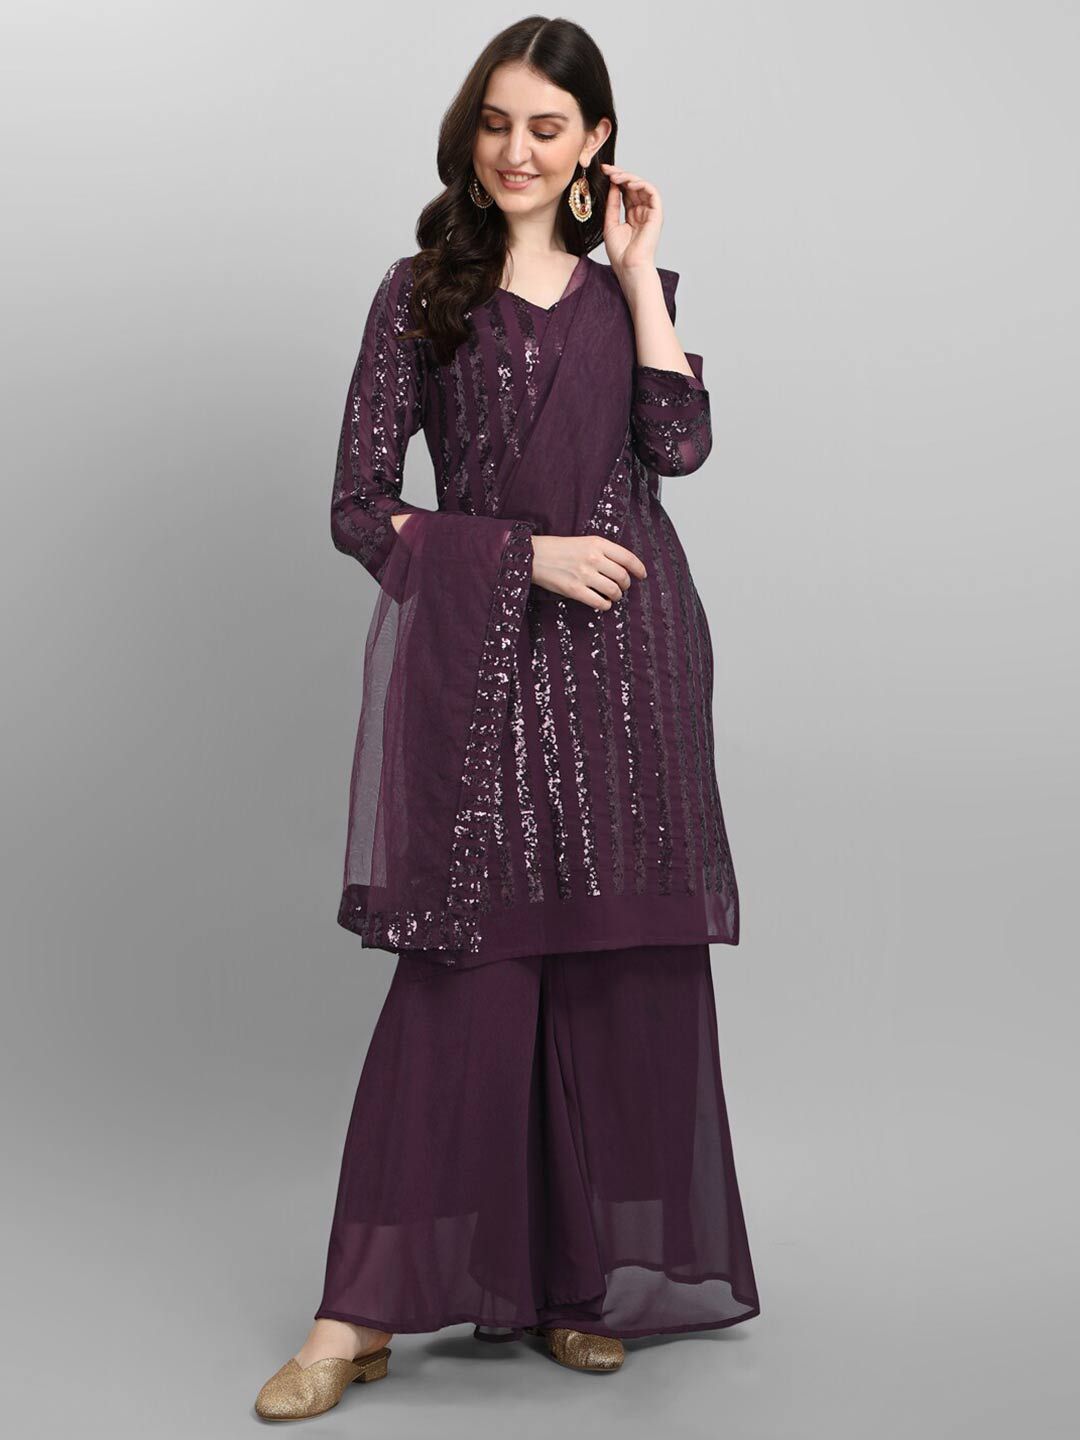 JATRIQQ Purple Embroidered Silk Georgette Semi-Stitched Dress Material Price in India